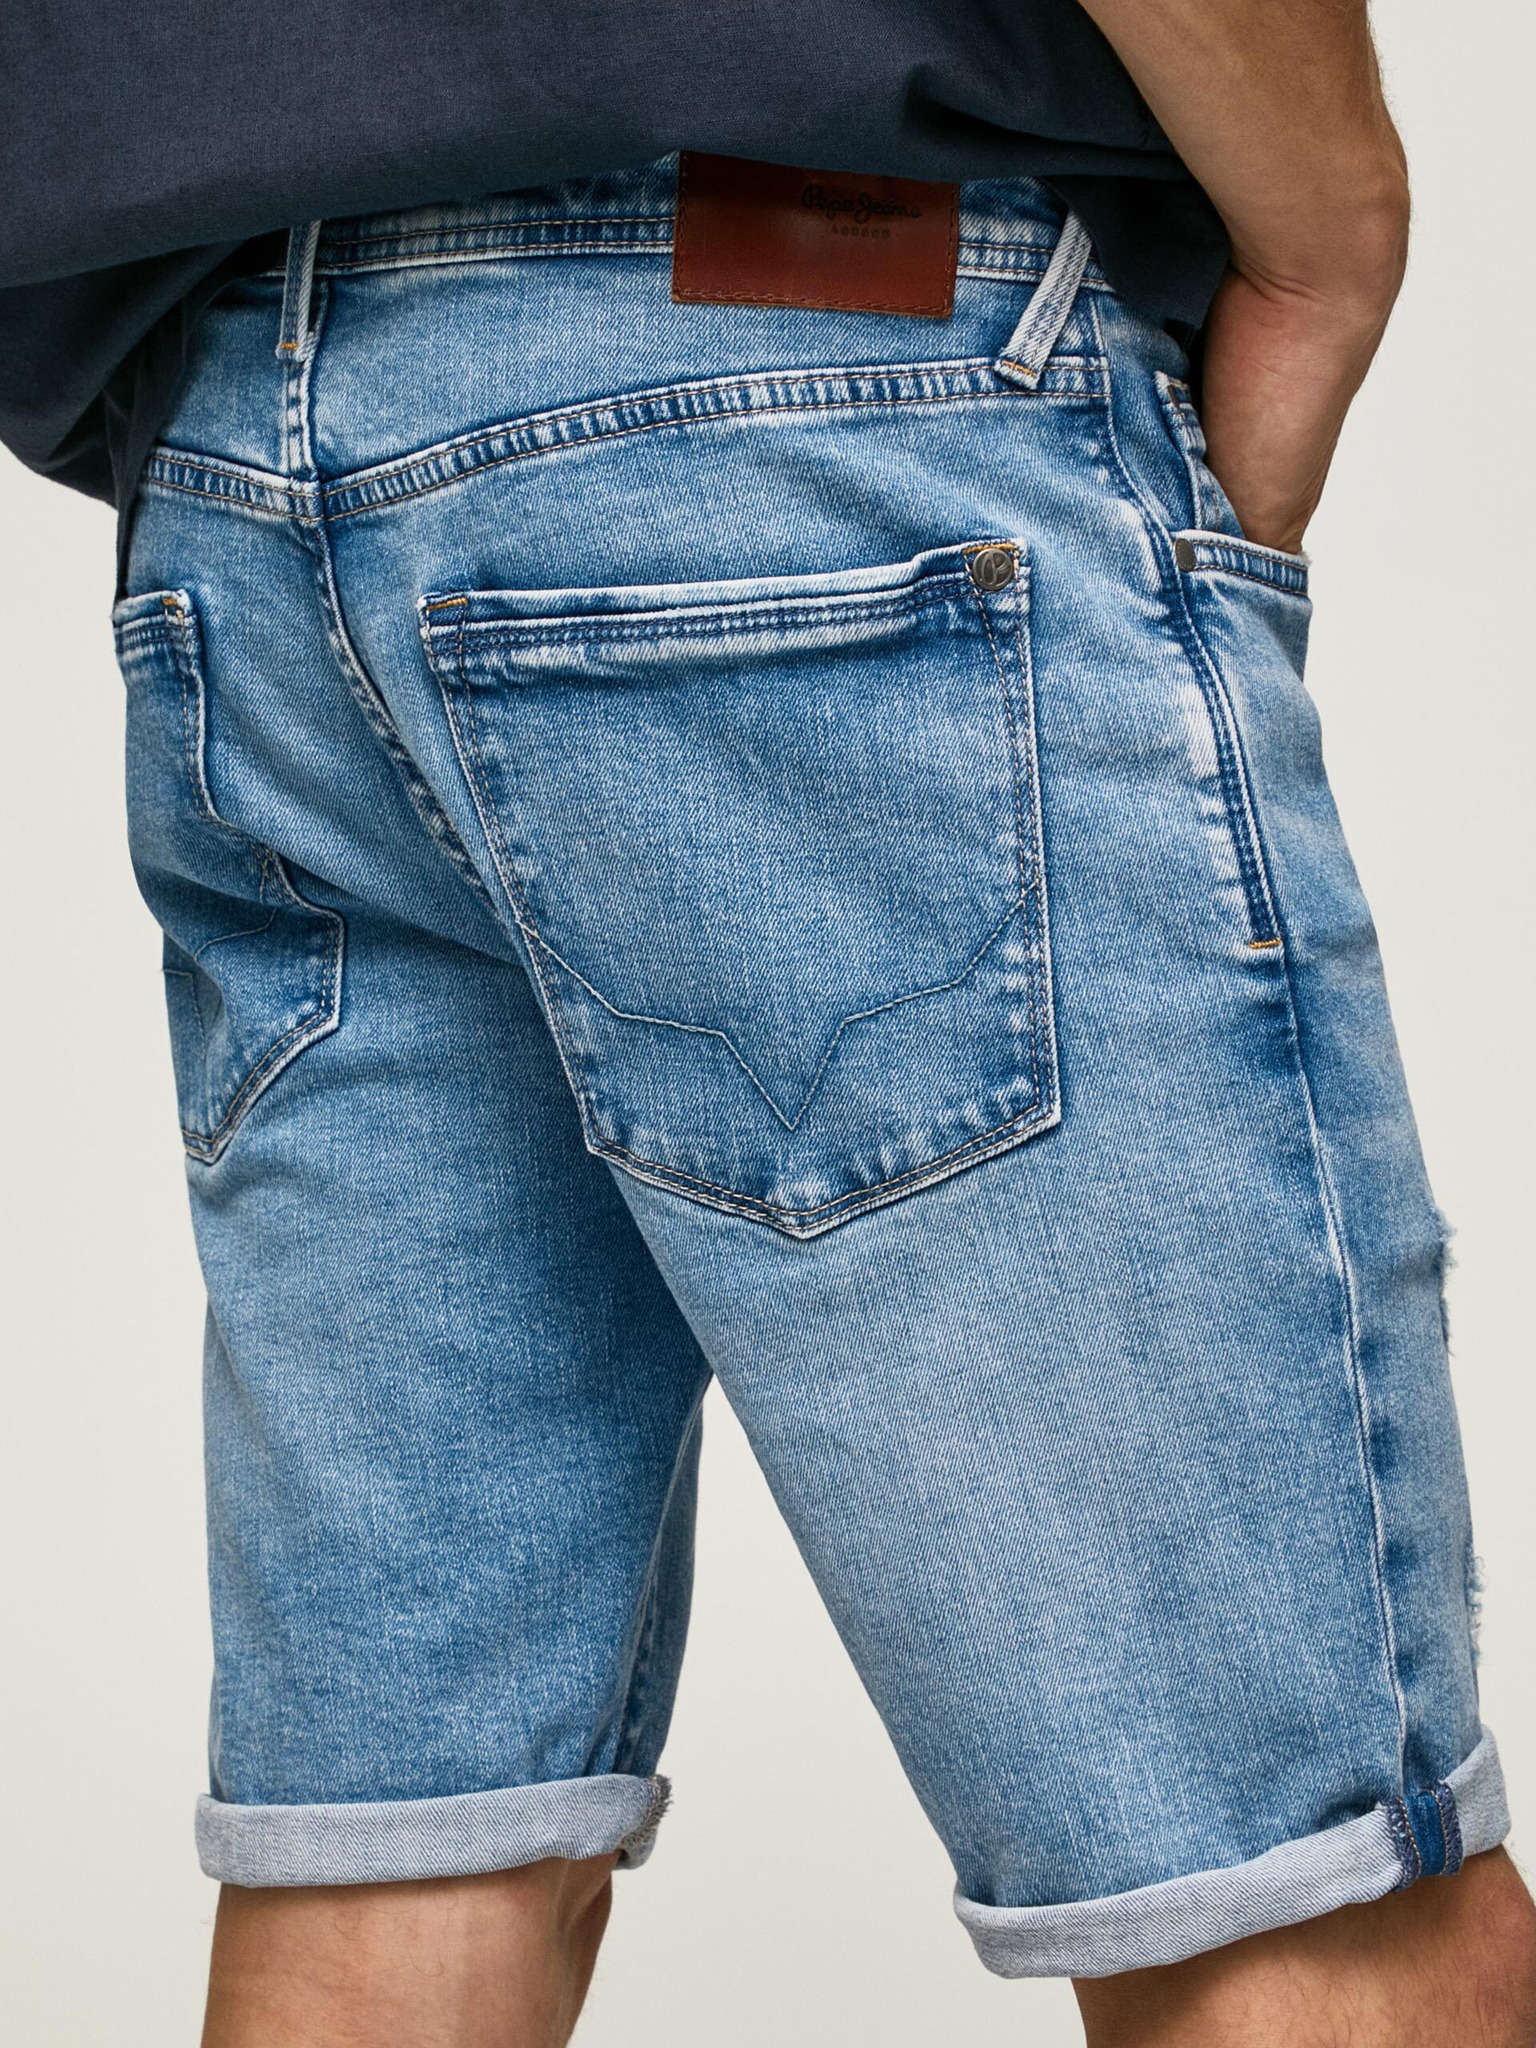 Mens Denim Shorts Loose Hip Hop Cropped Jeans Blue Skateboard Short Pants  Casual | eBay